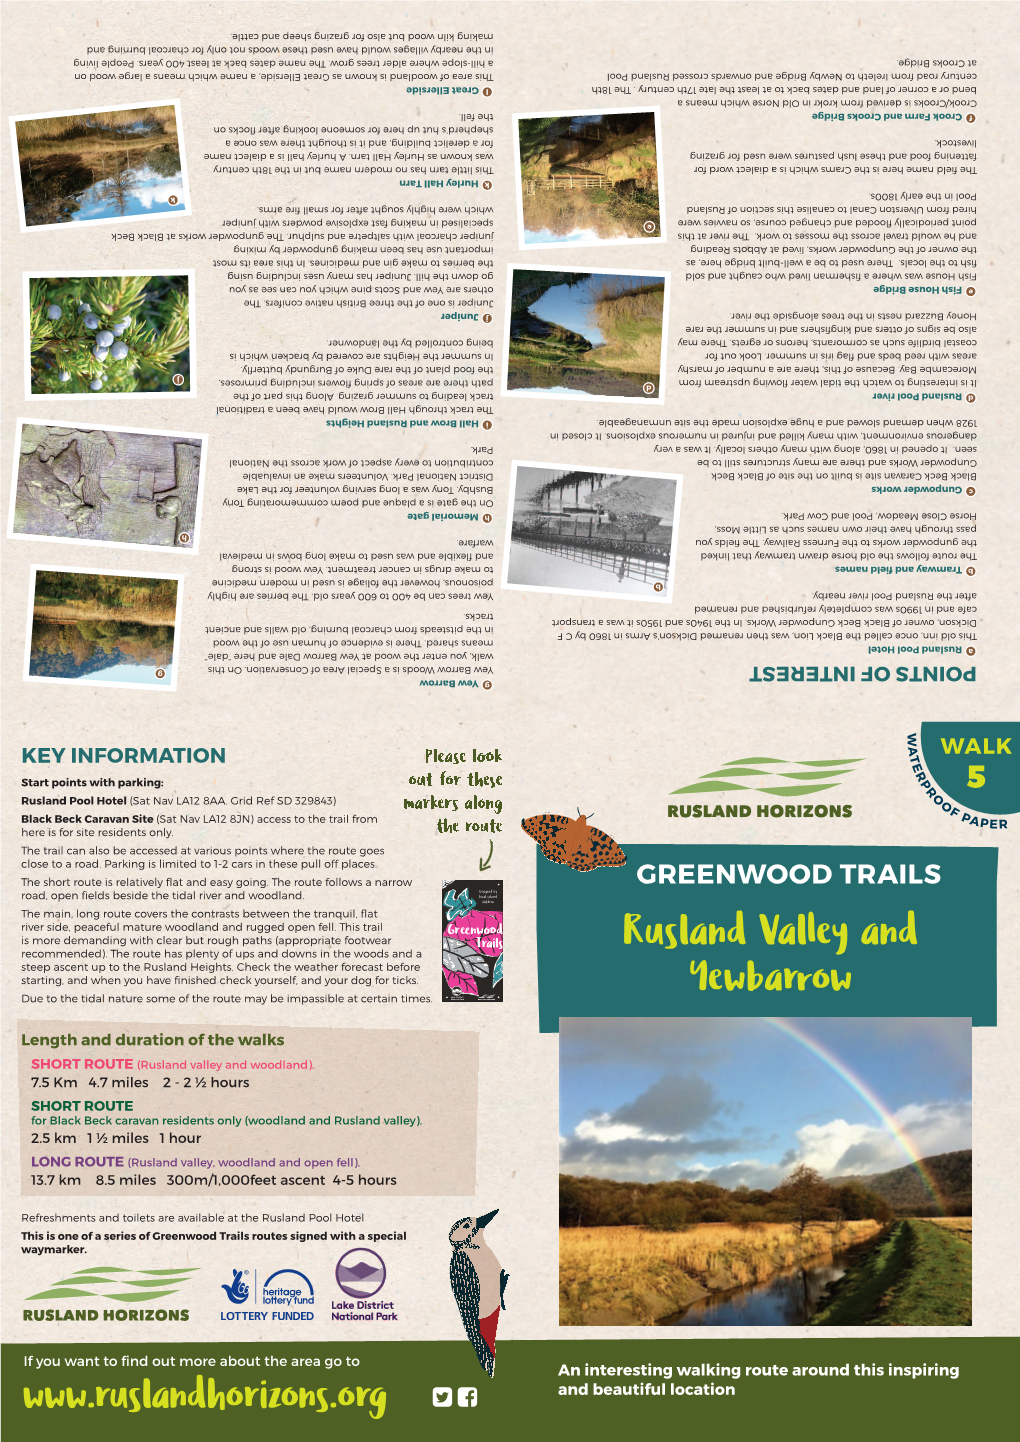 Greenwood Trail 5: Rusland Valley and Yewbarrow(4